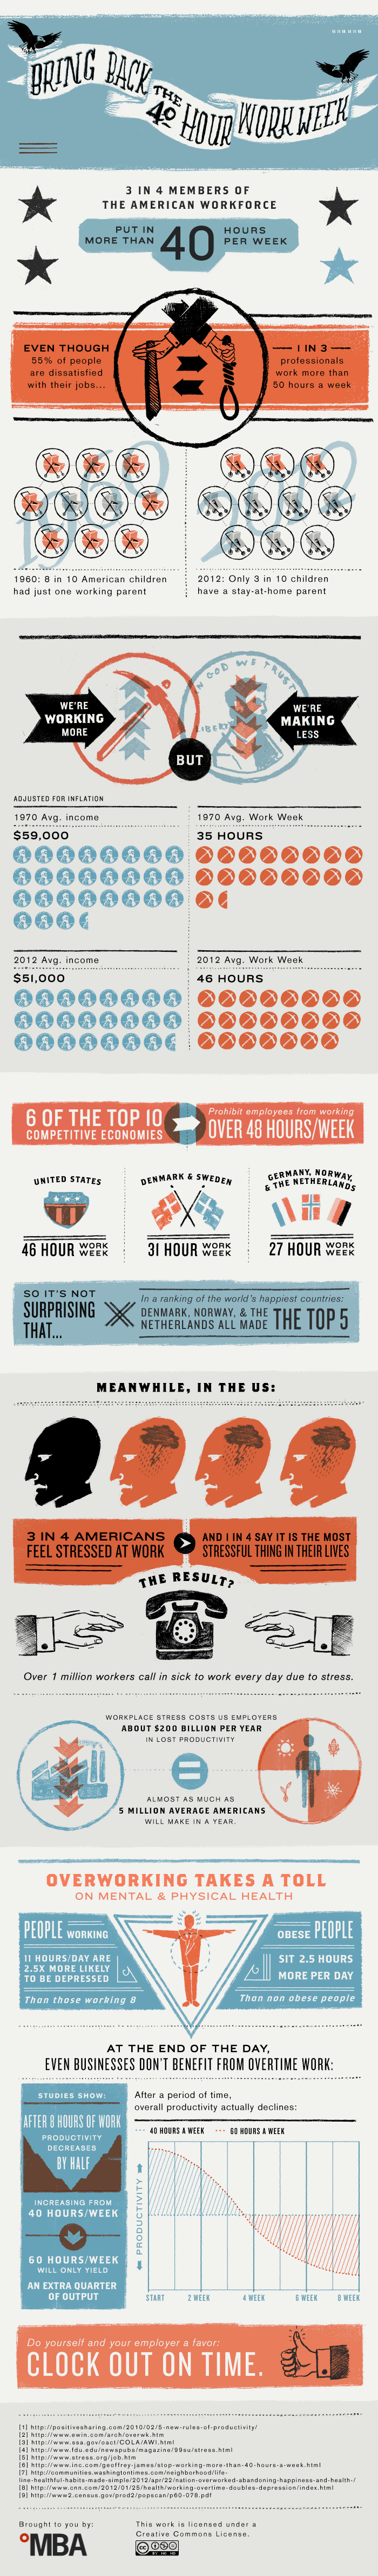 Work Week Infographic: Bring Back The 40 Hour Work Week - ComplianceandSafety.com